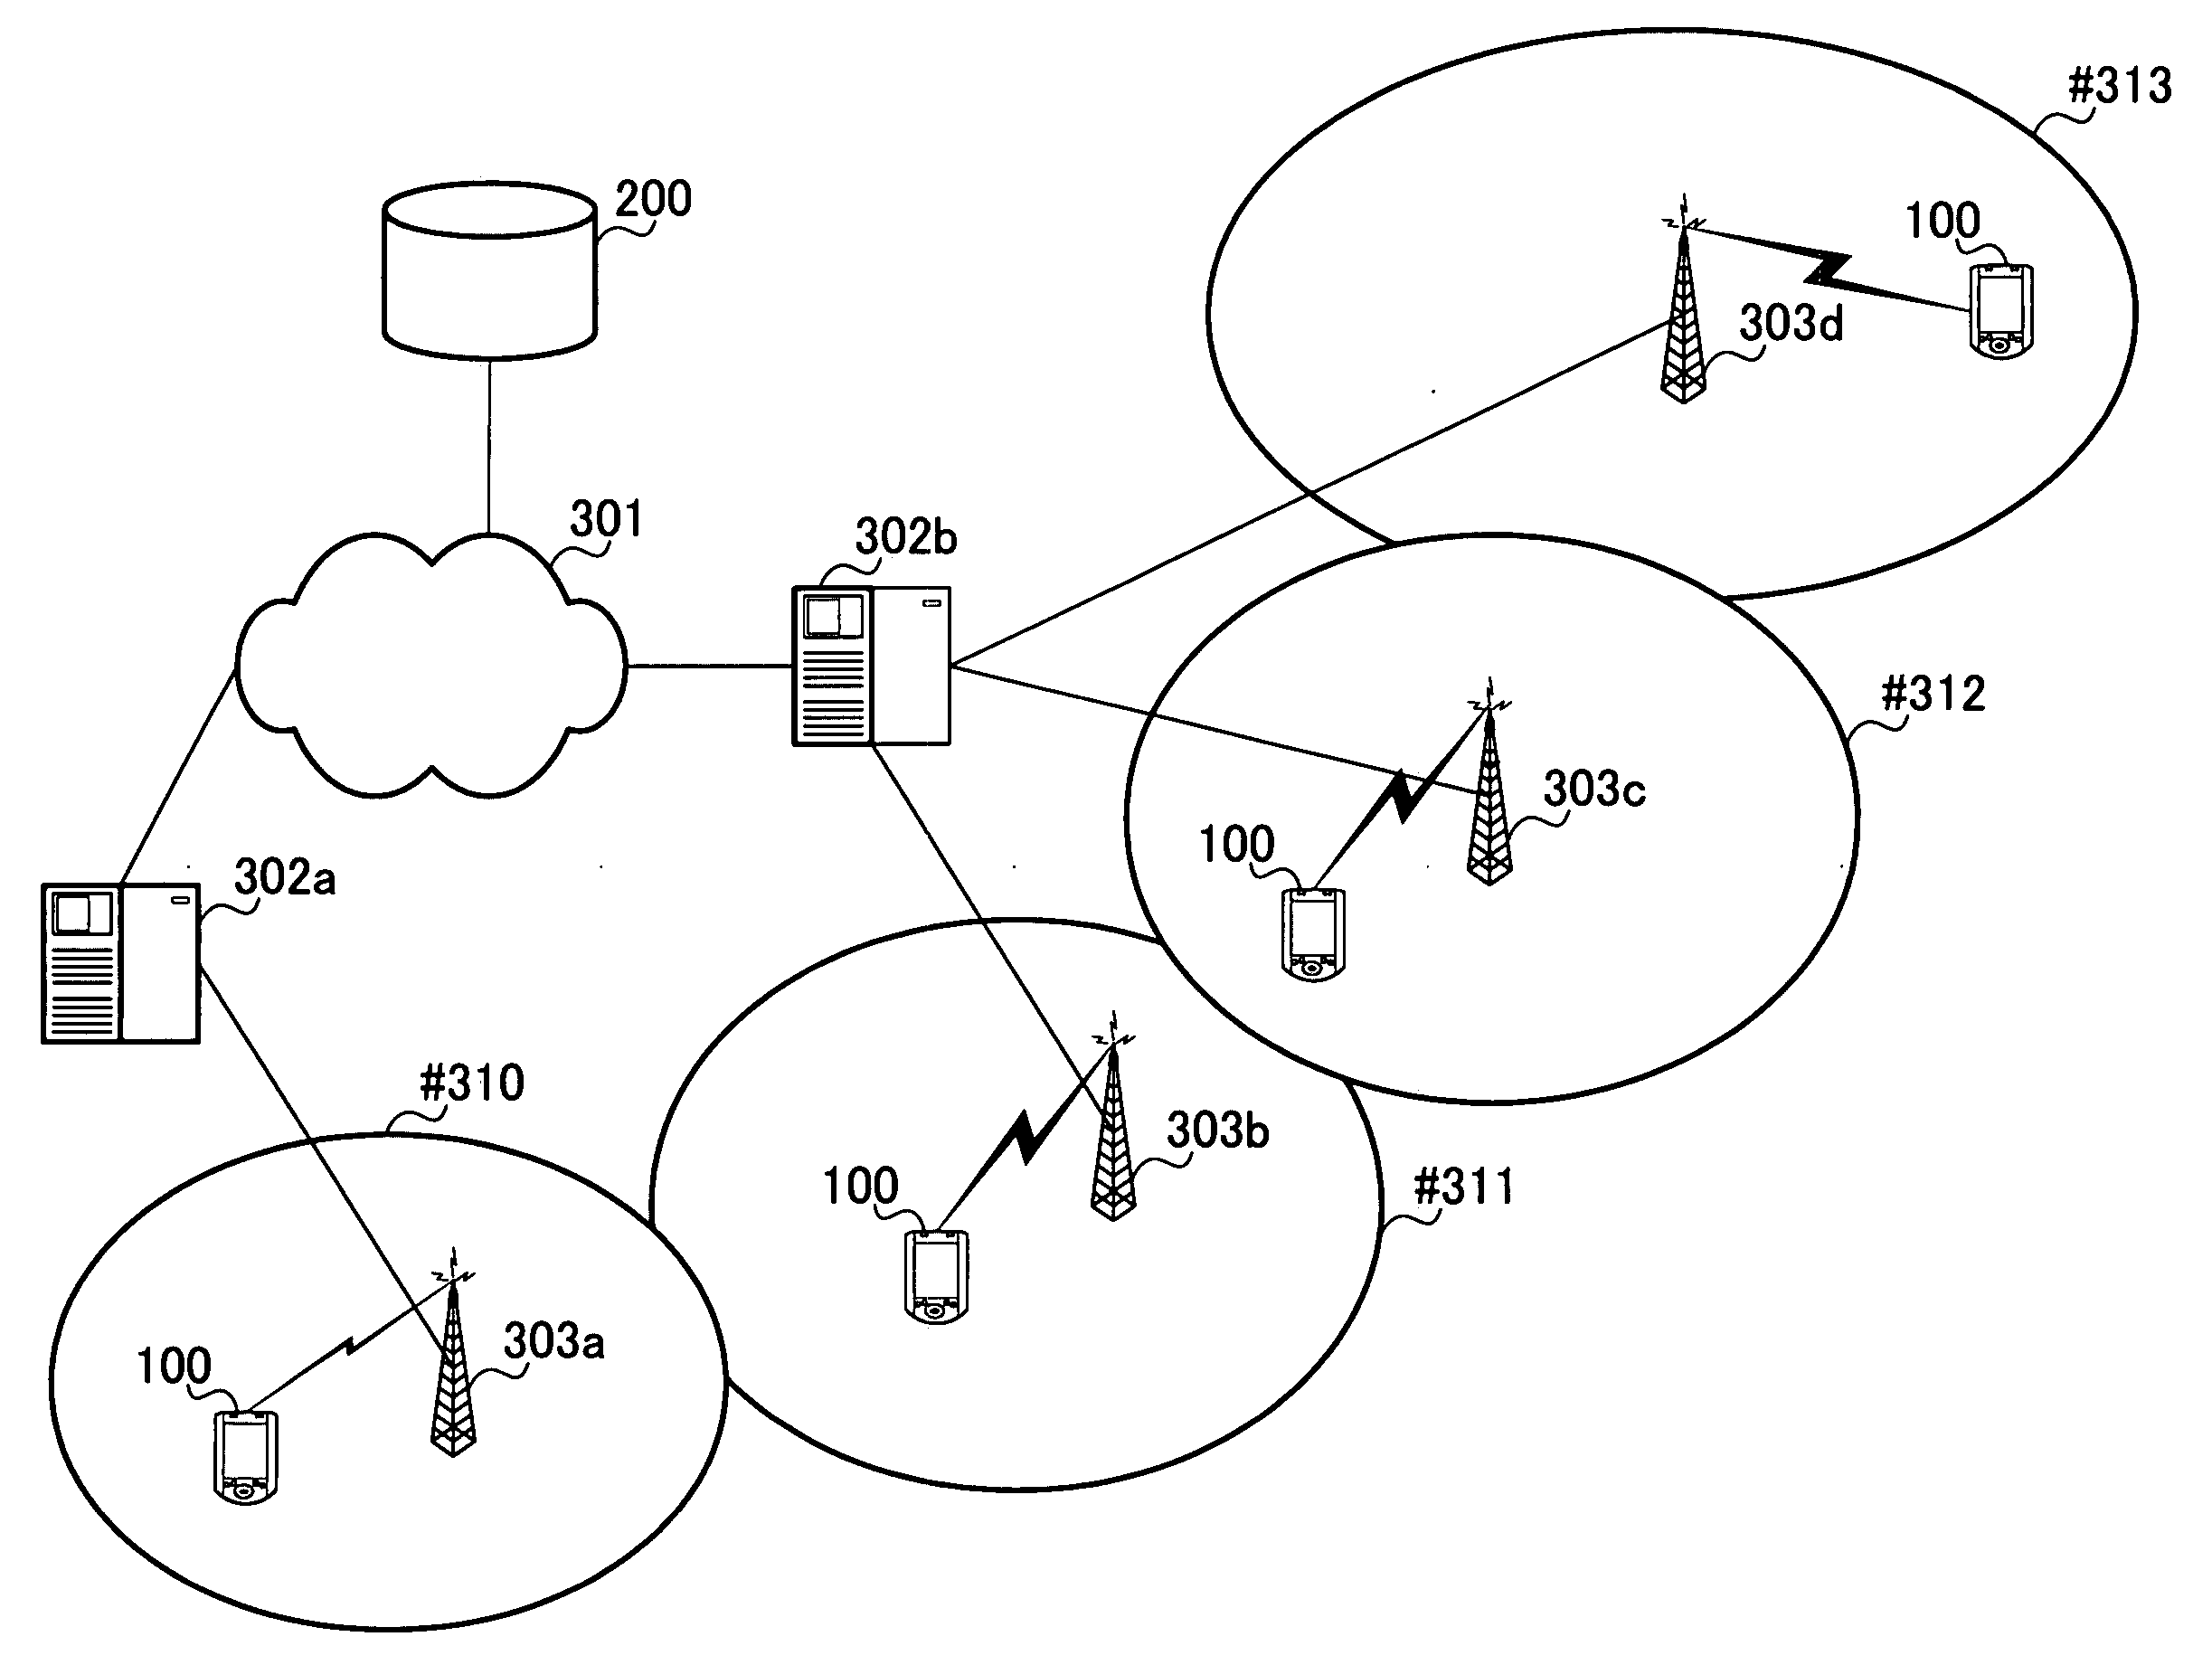 Terminal apparatus and received data display method